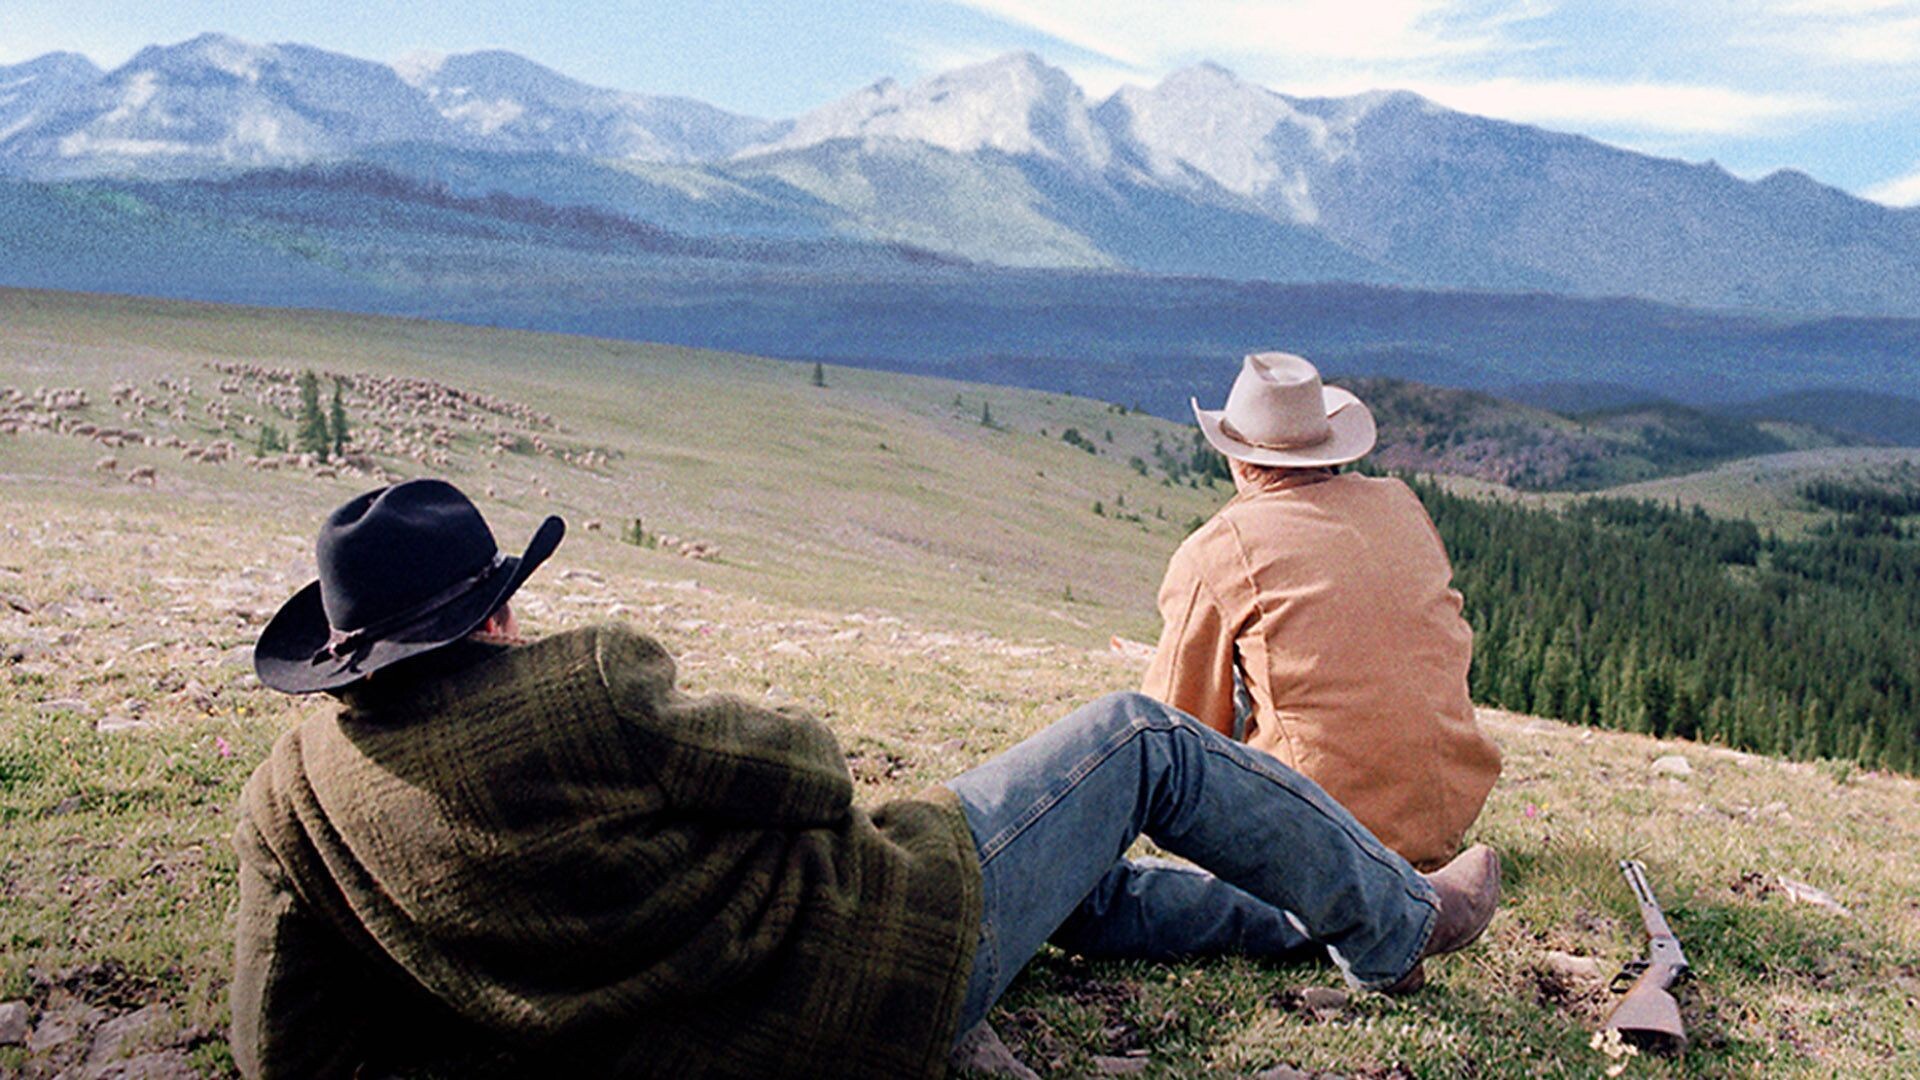 Brokeback Mountain: Ennis Del Mar and Jack Twist, The sheep farm of Joe Aguirre, An intimate relationship. 1920x1080 Full HD Wallpaper.